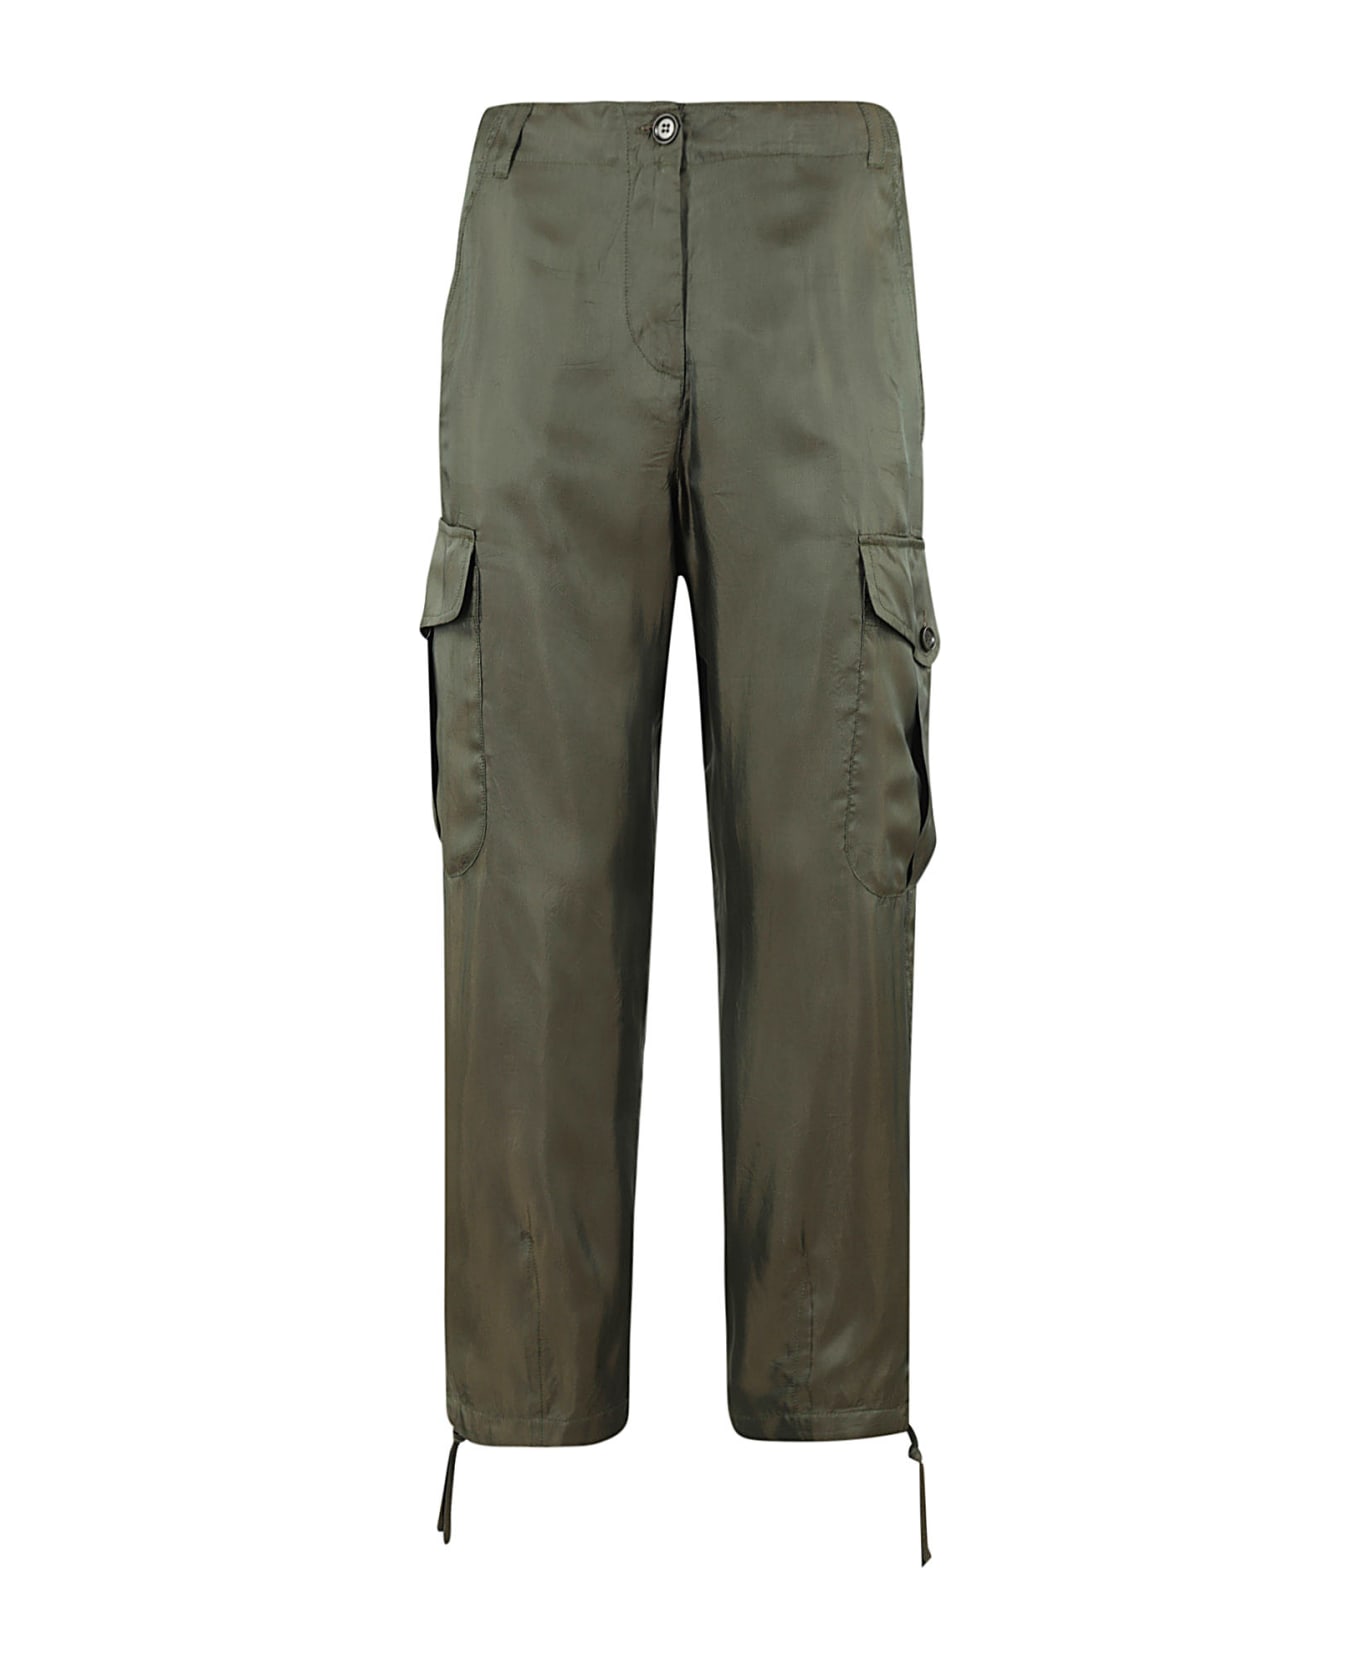 Aspesi Pantalone Mod 0169 - Militare 